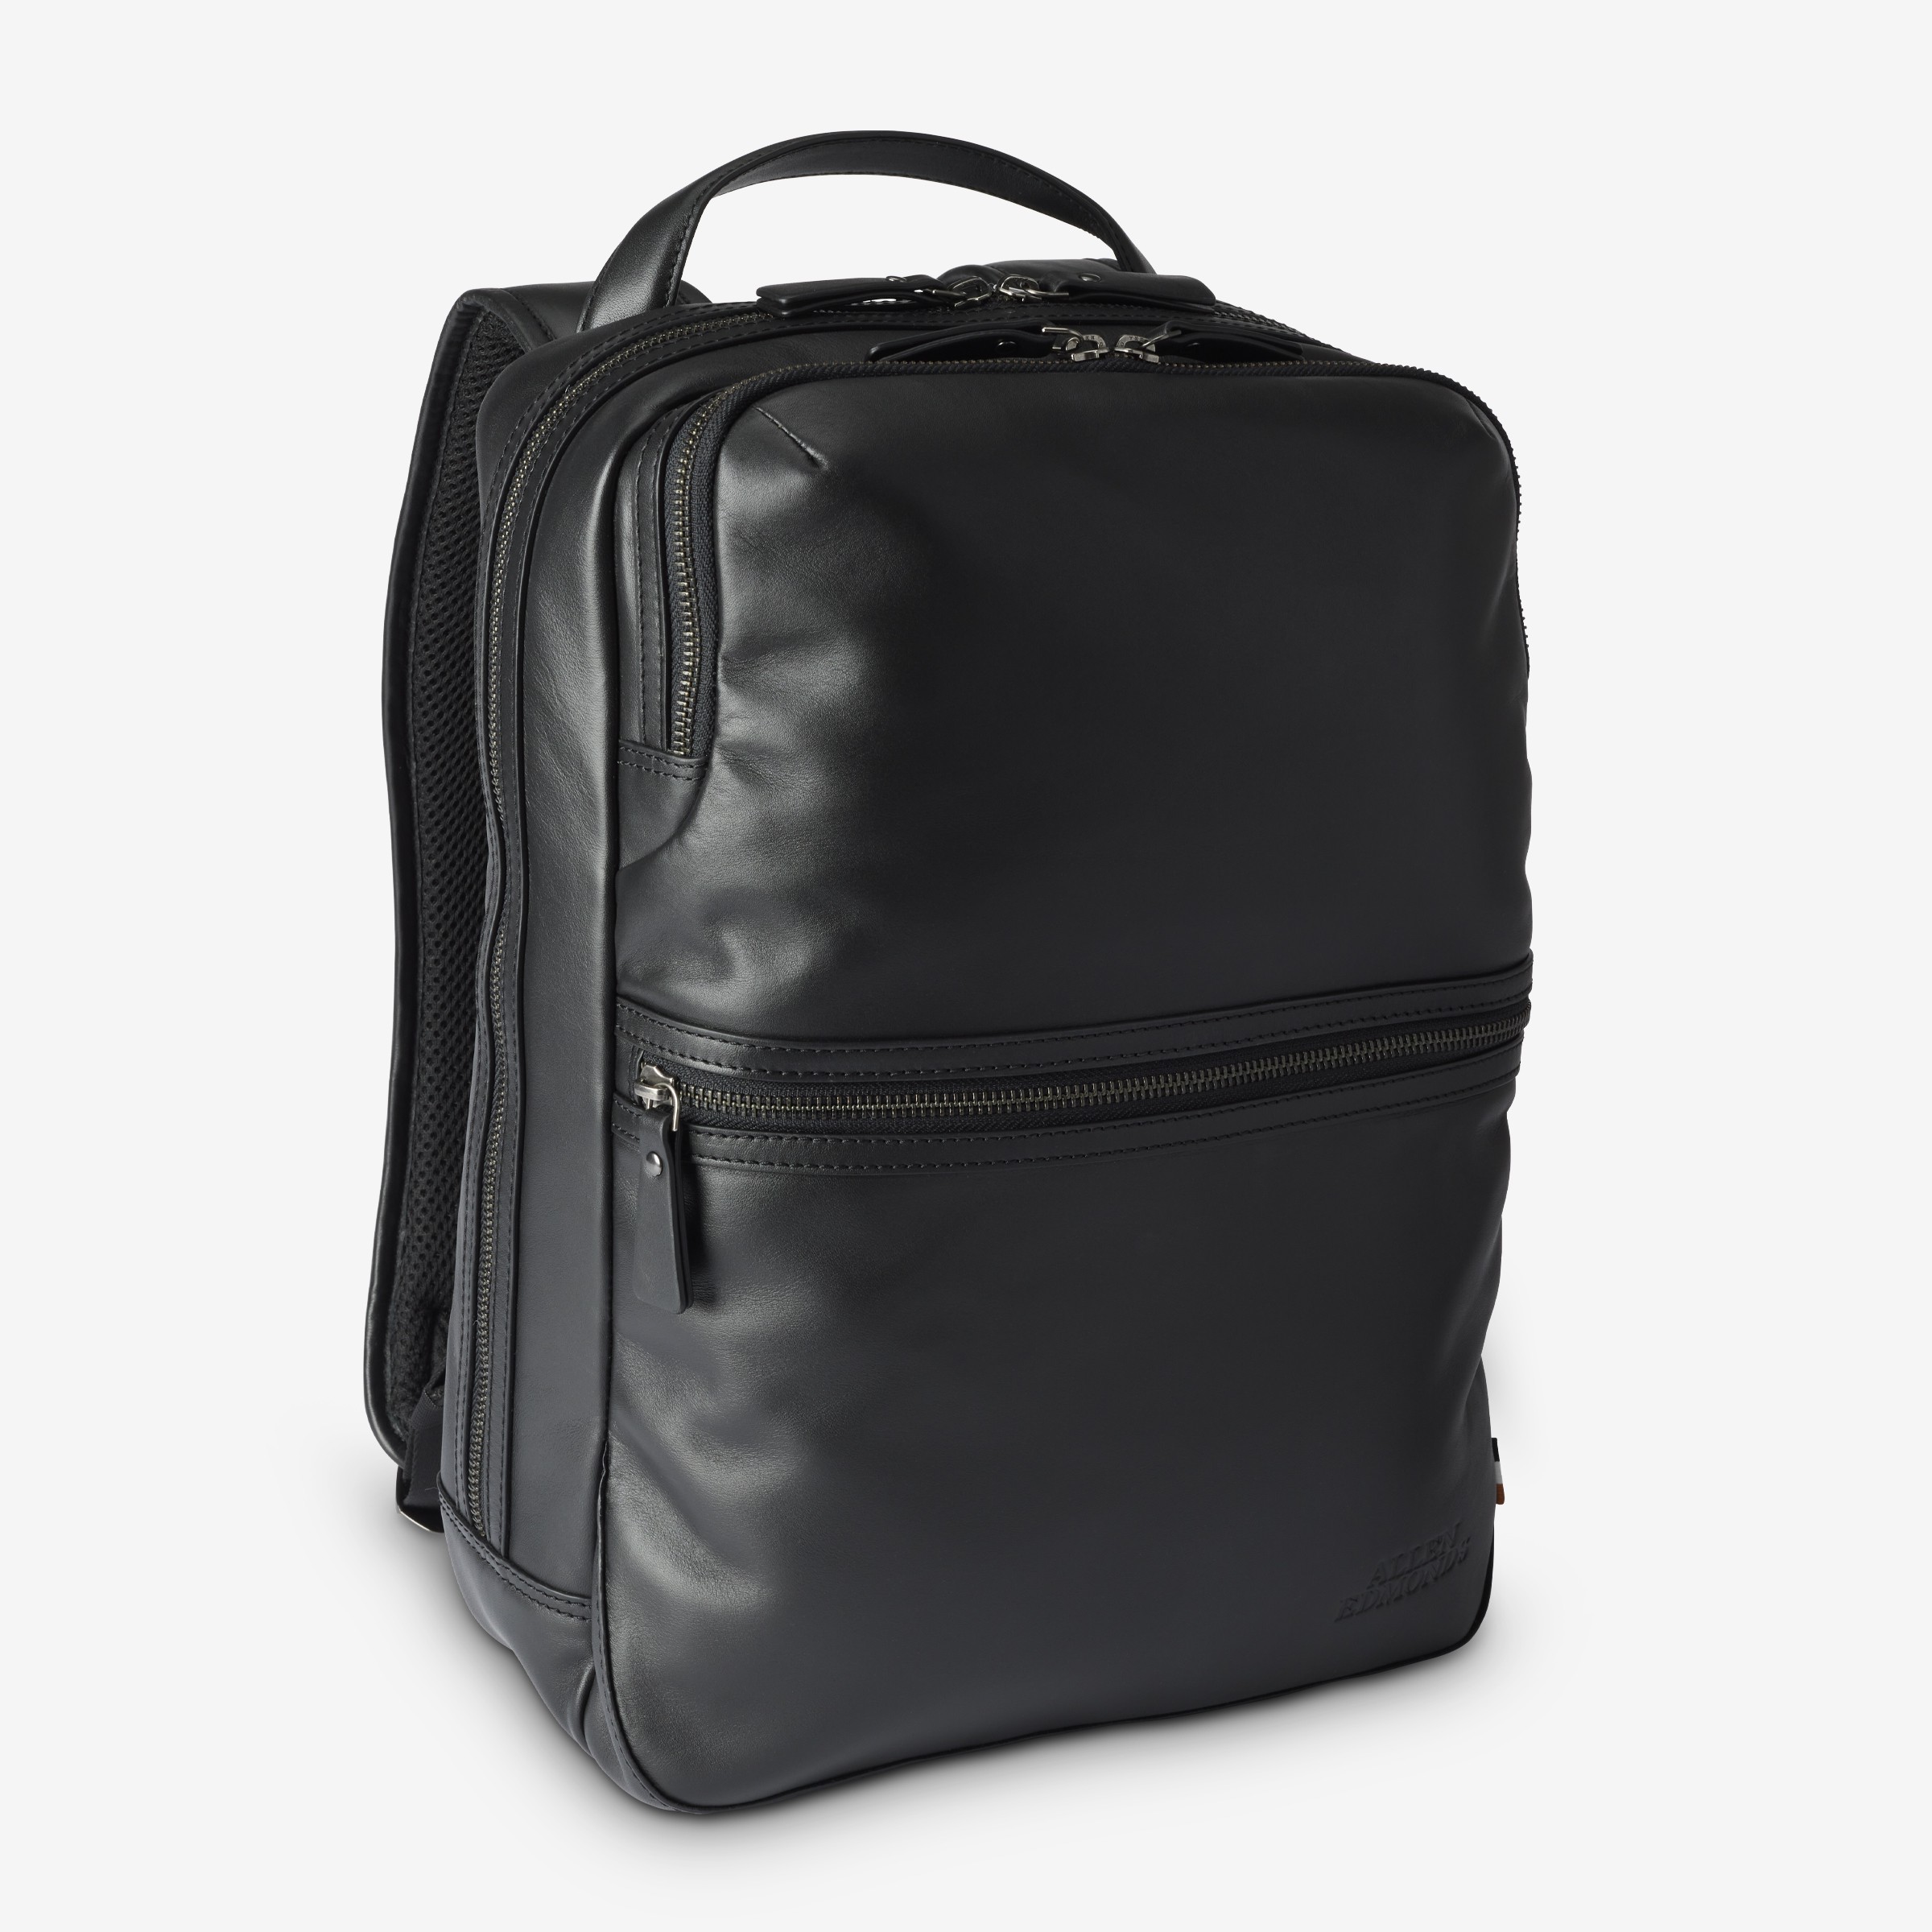 Allen Edmonds Backpack in Black Leather